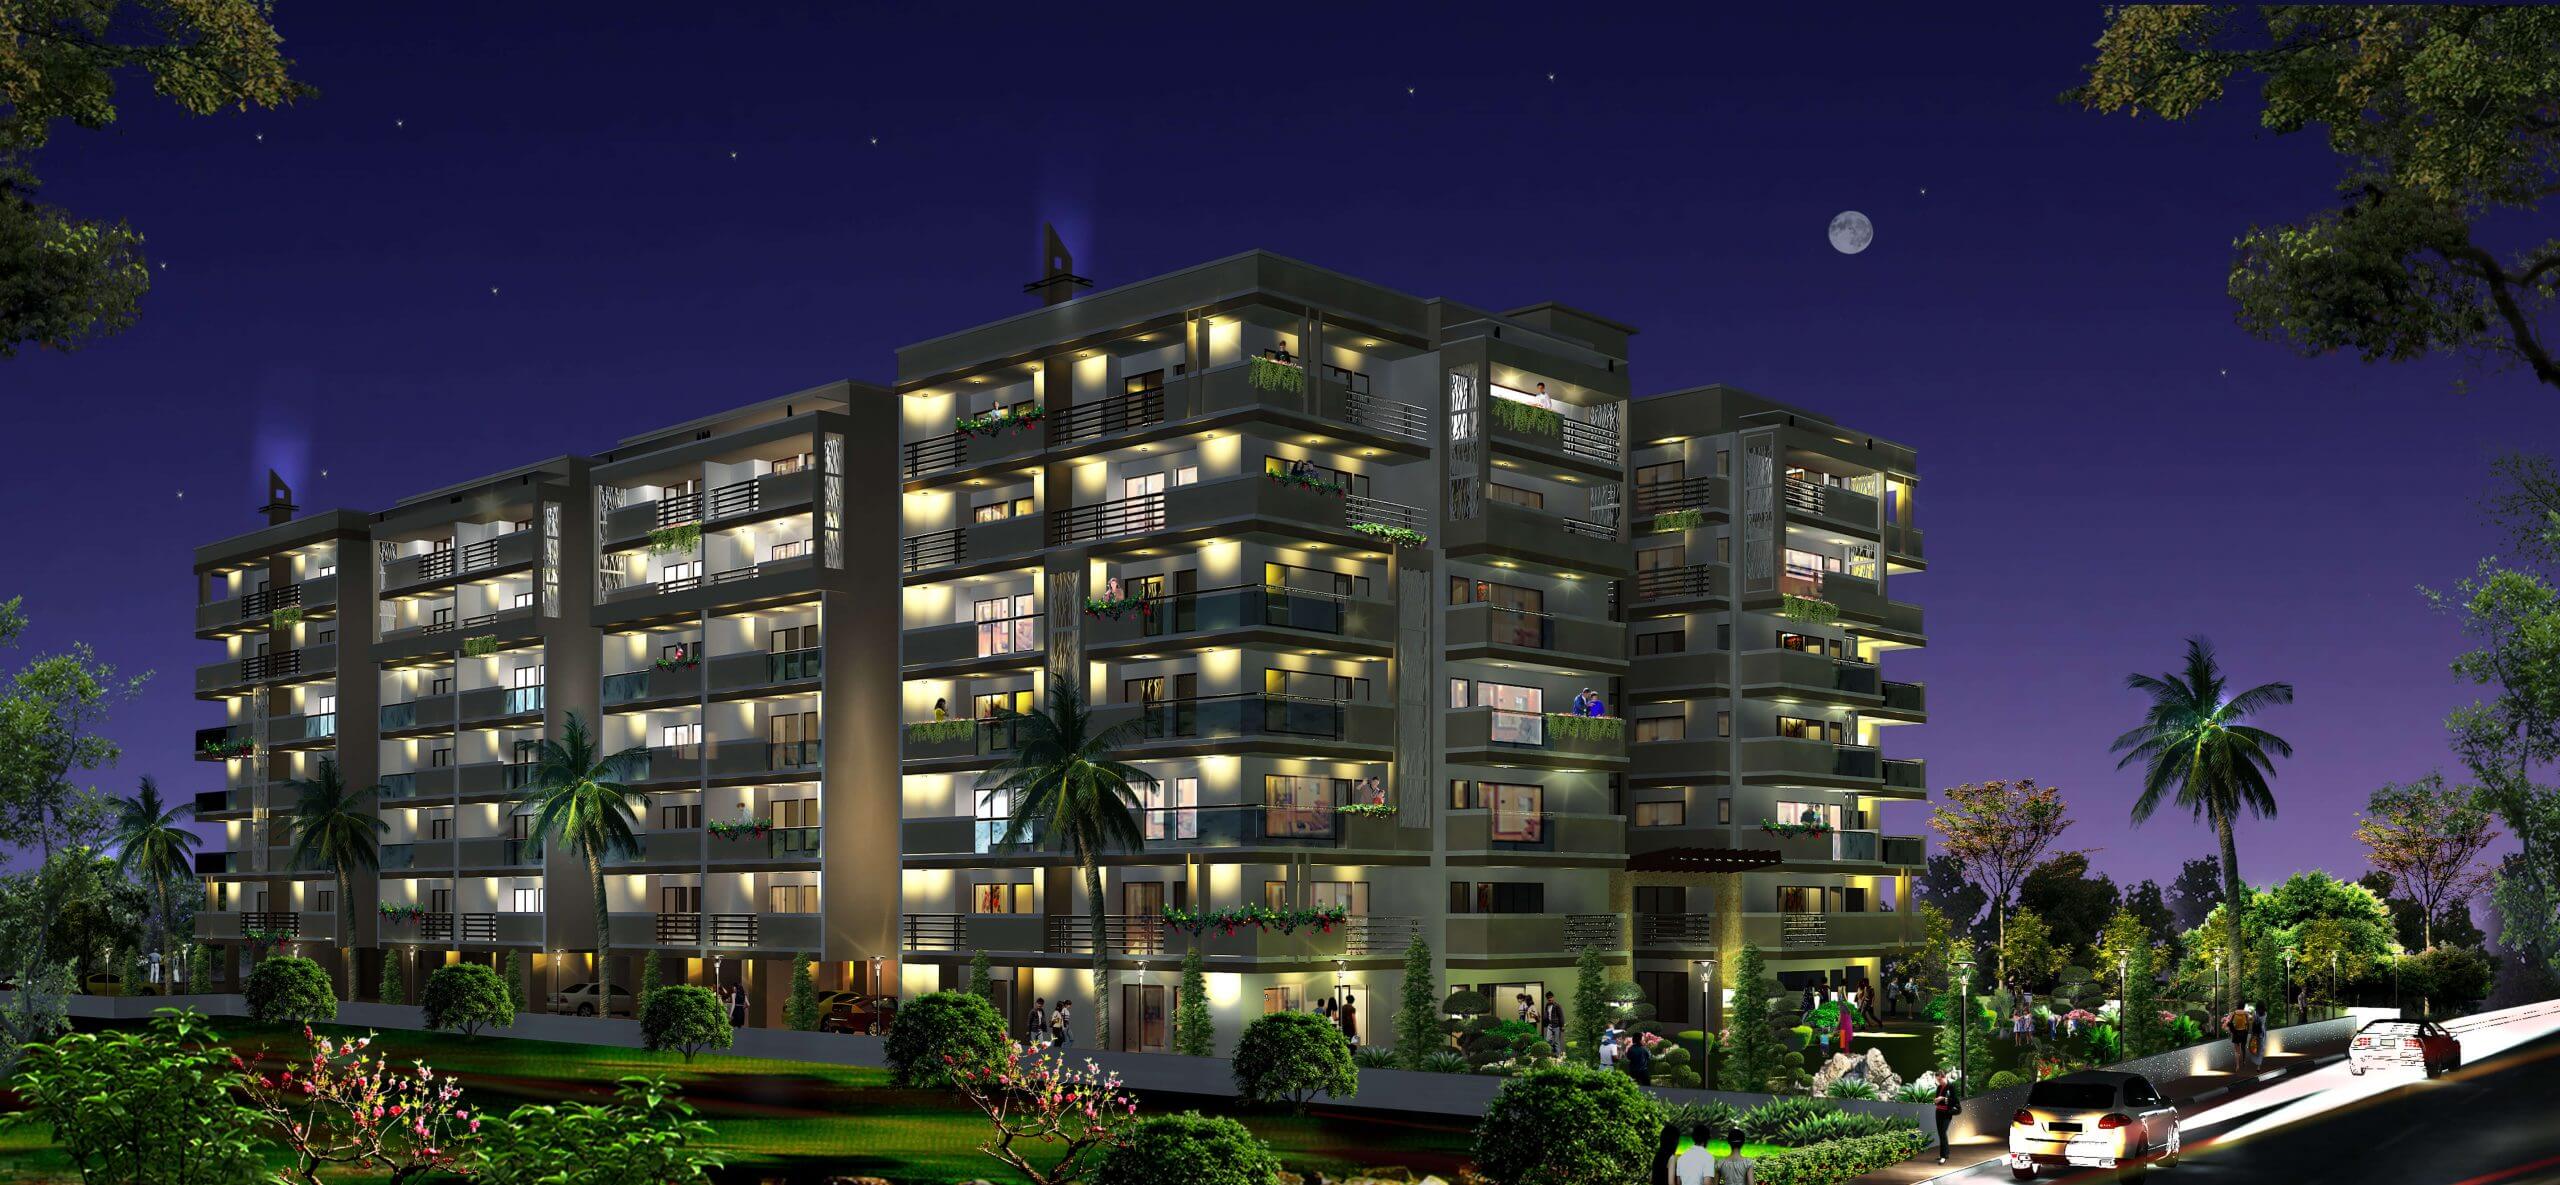 Maxvel Residency - Flats in Dehradun